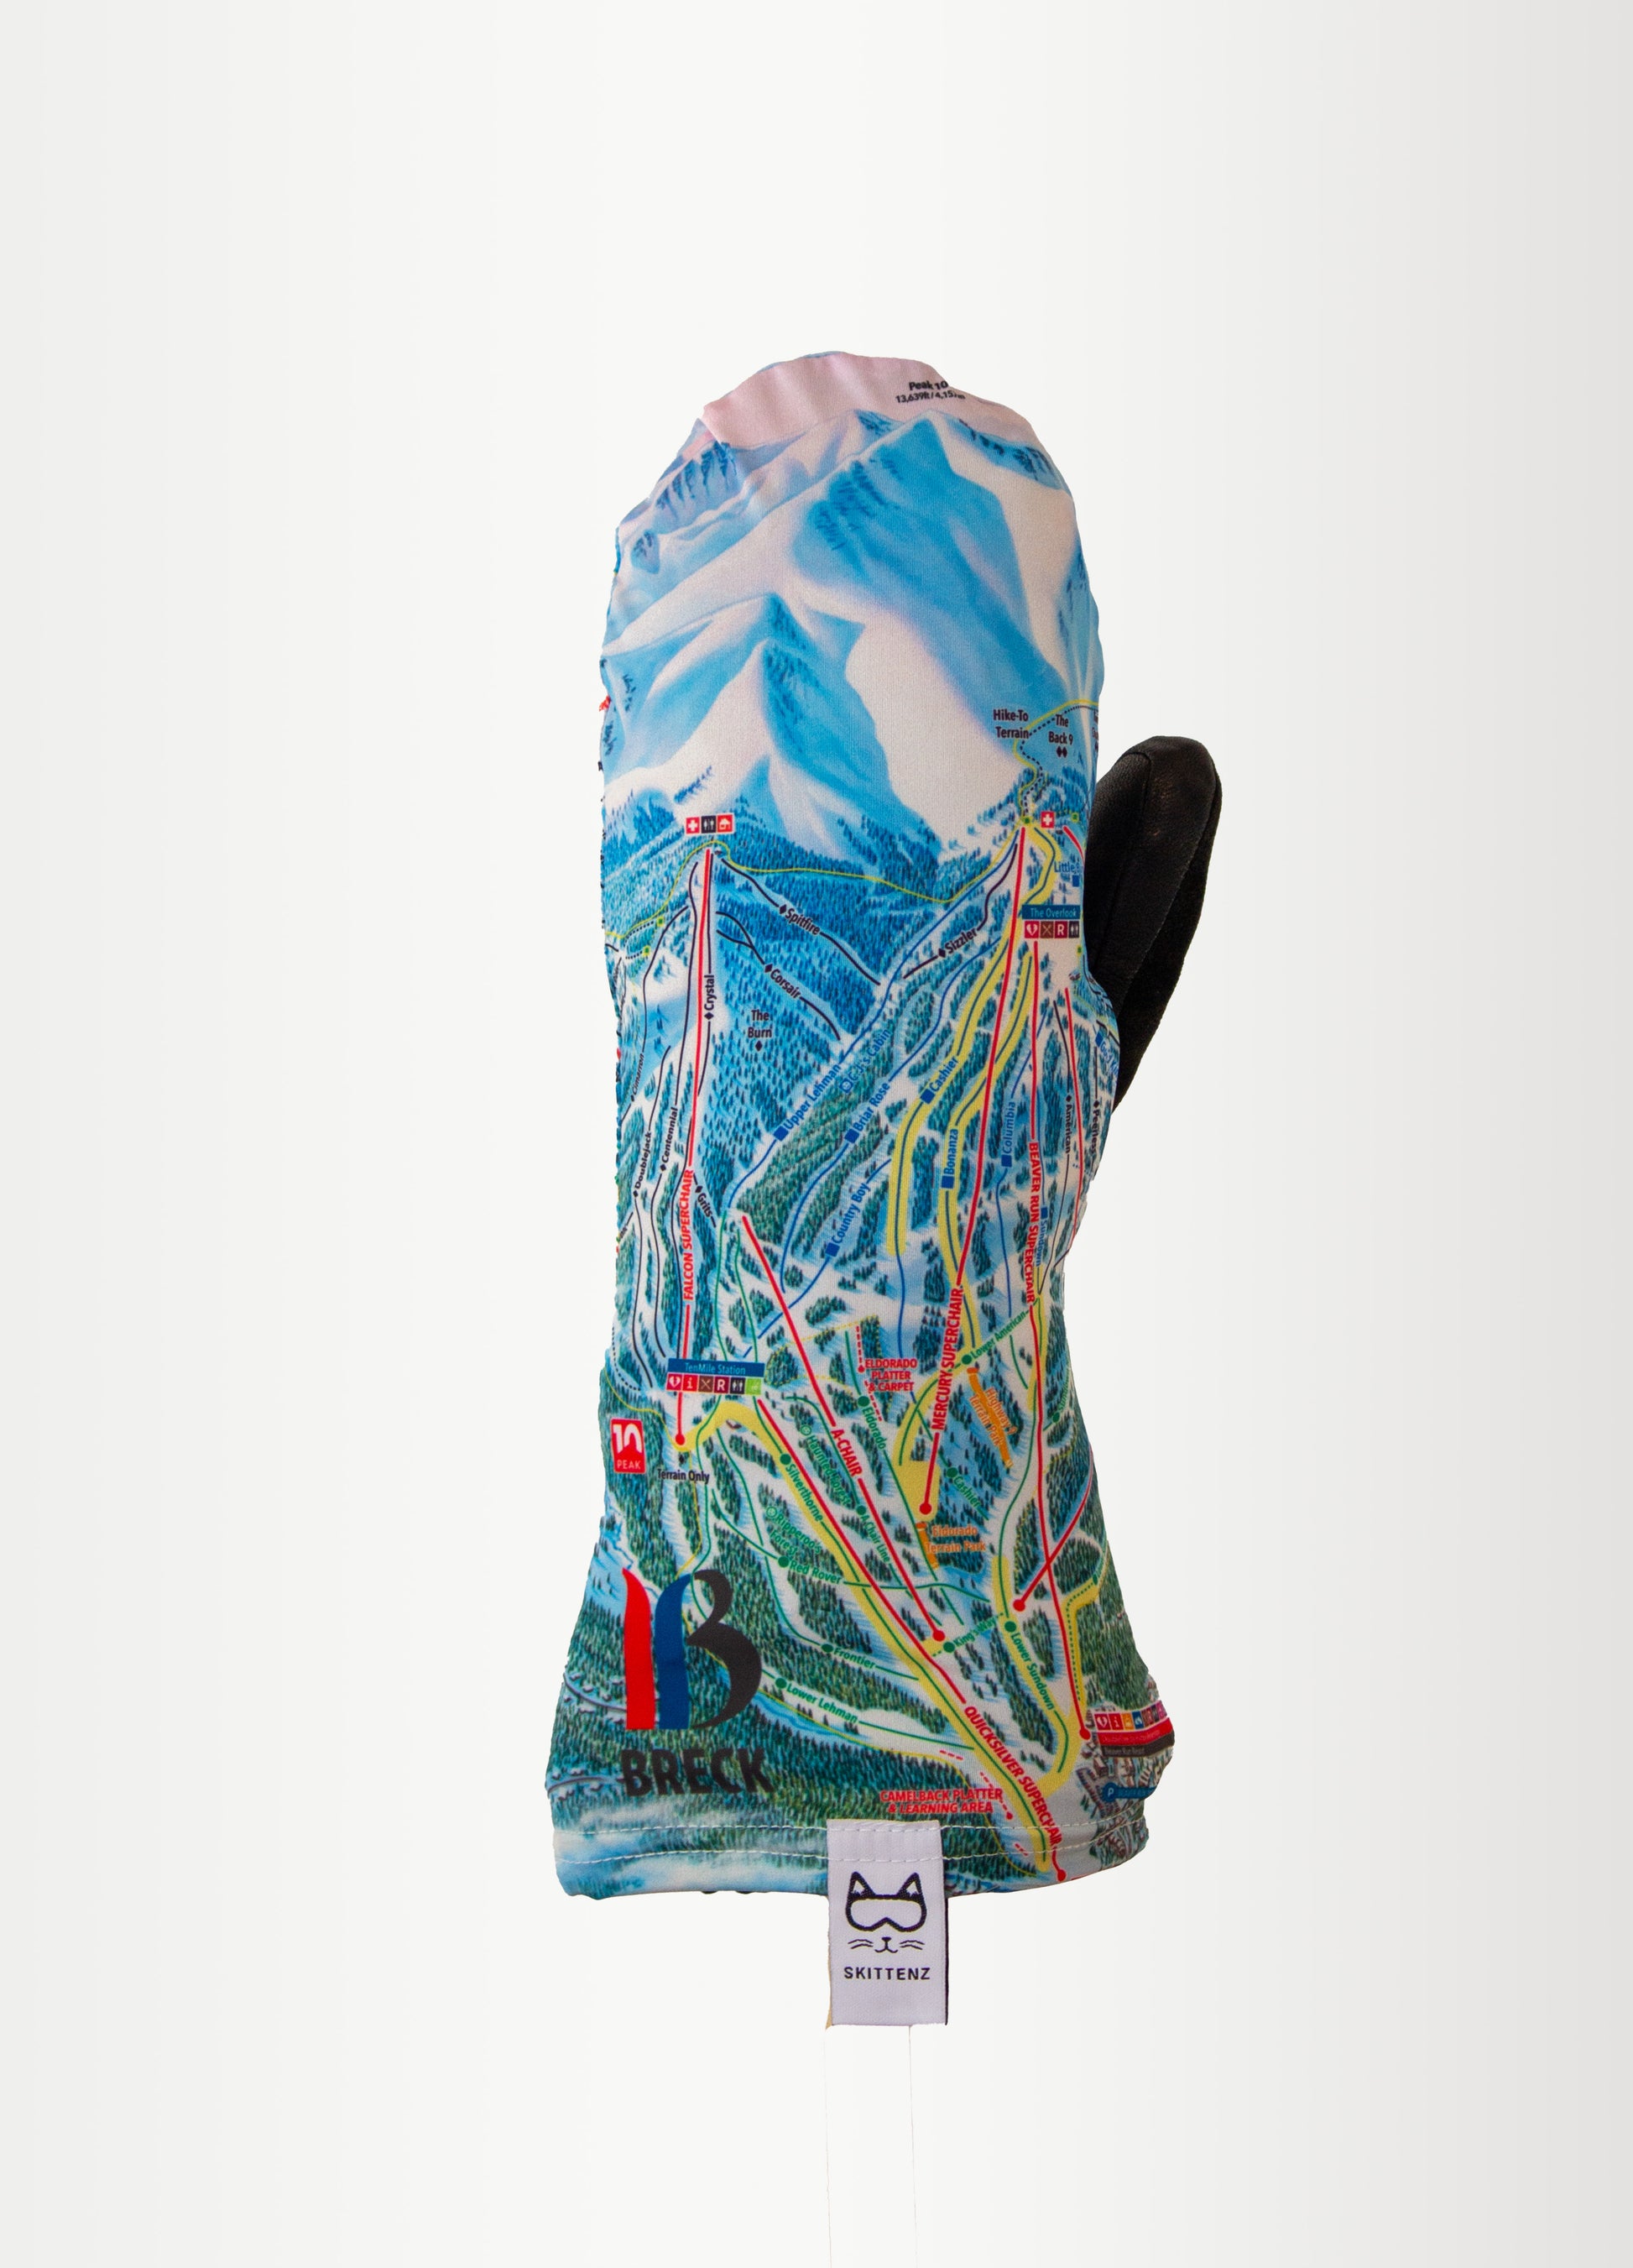 Breckenridge Ski or Snowboard Trail Map Skins for Mittens or GlovesBreckenridge Ski or Snowboard Trail Map Skins for Mittens or Gloves